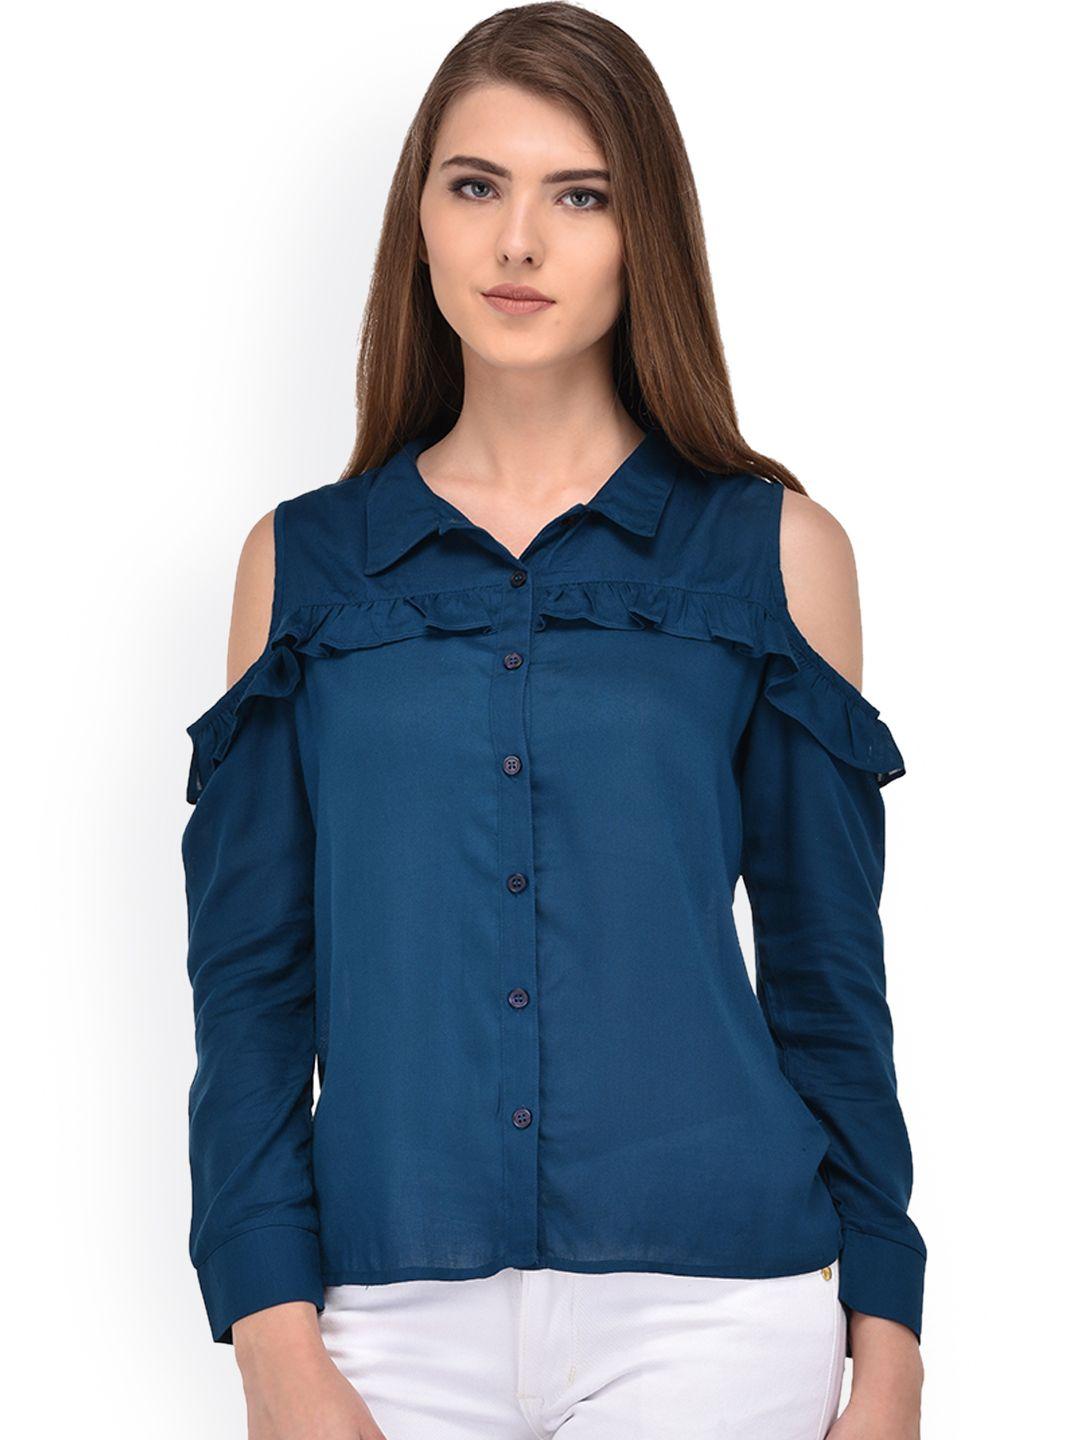 purys women teal blue snug slim fit solid casual shirt